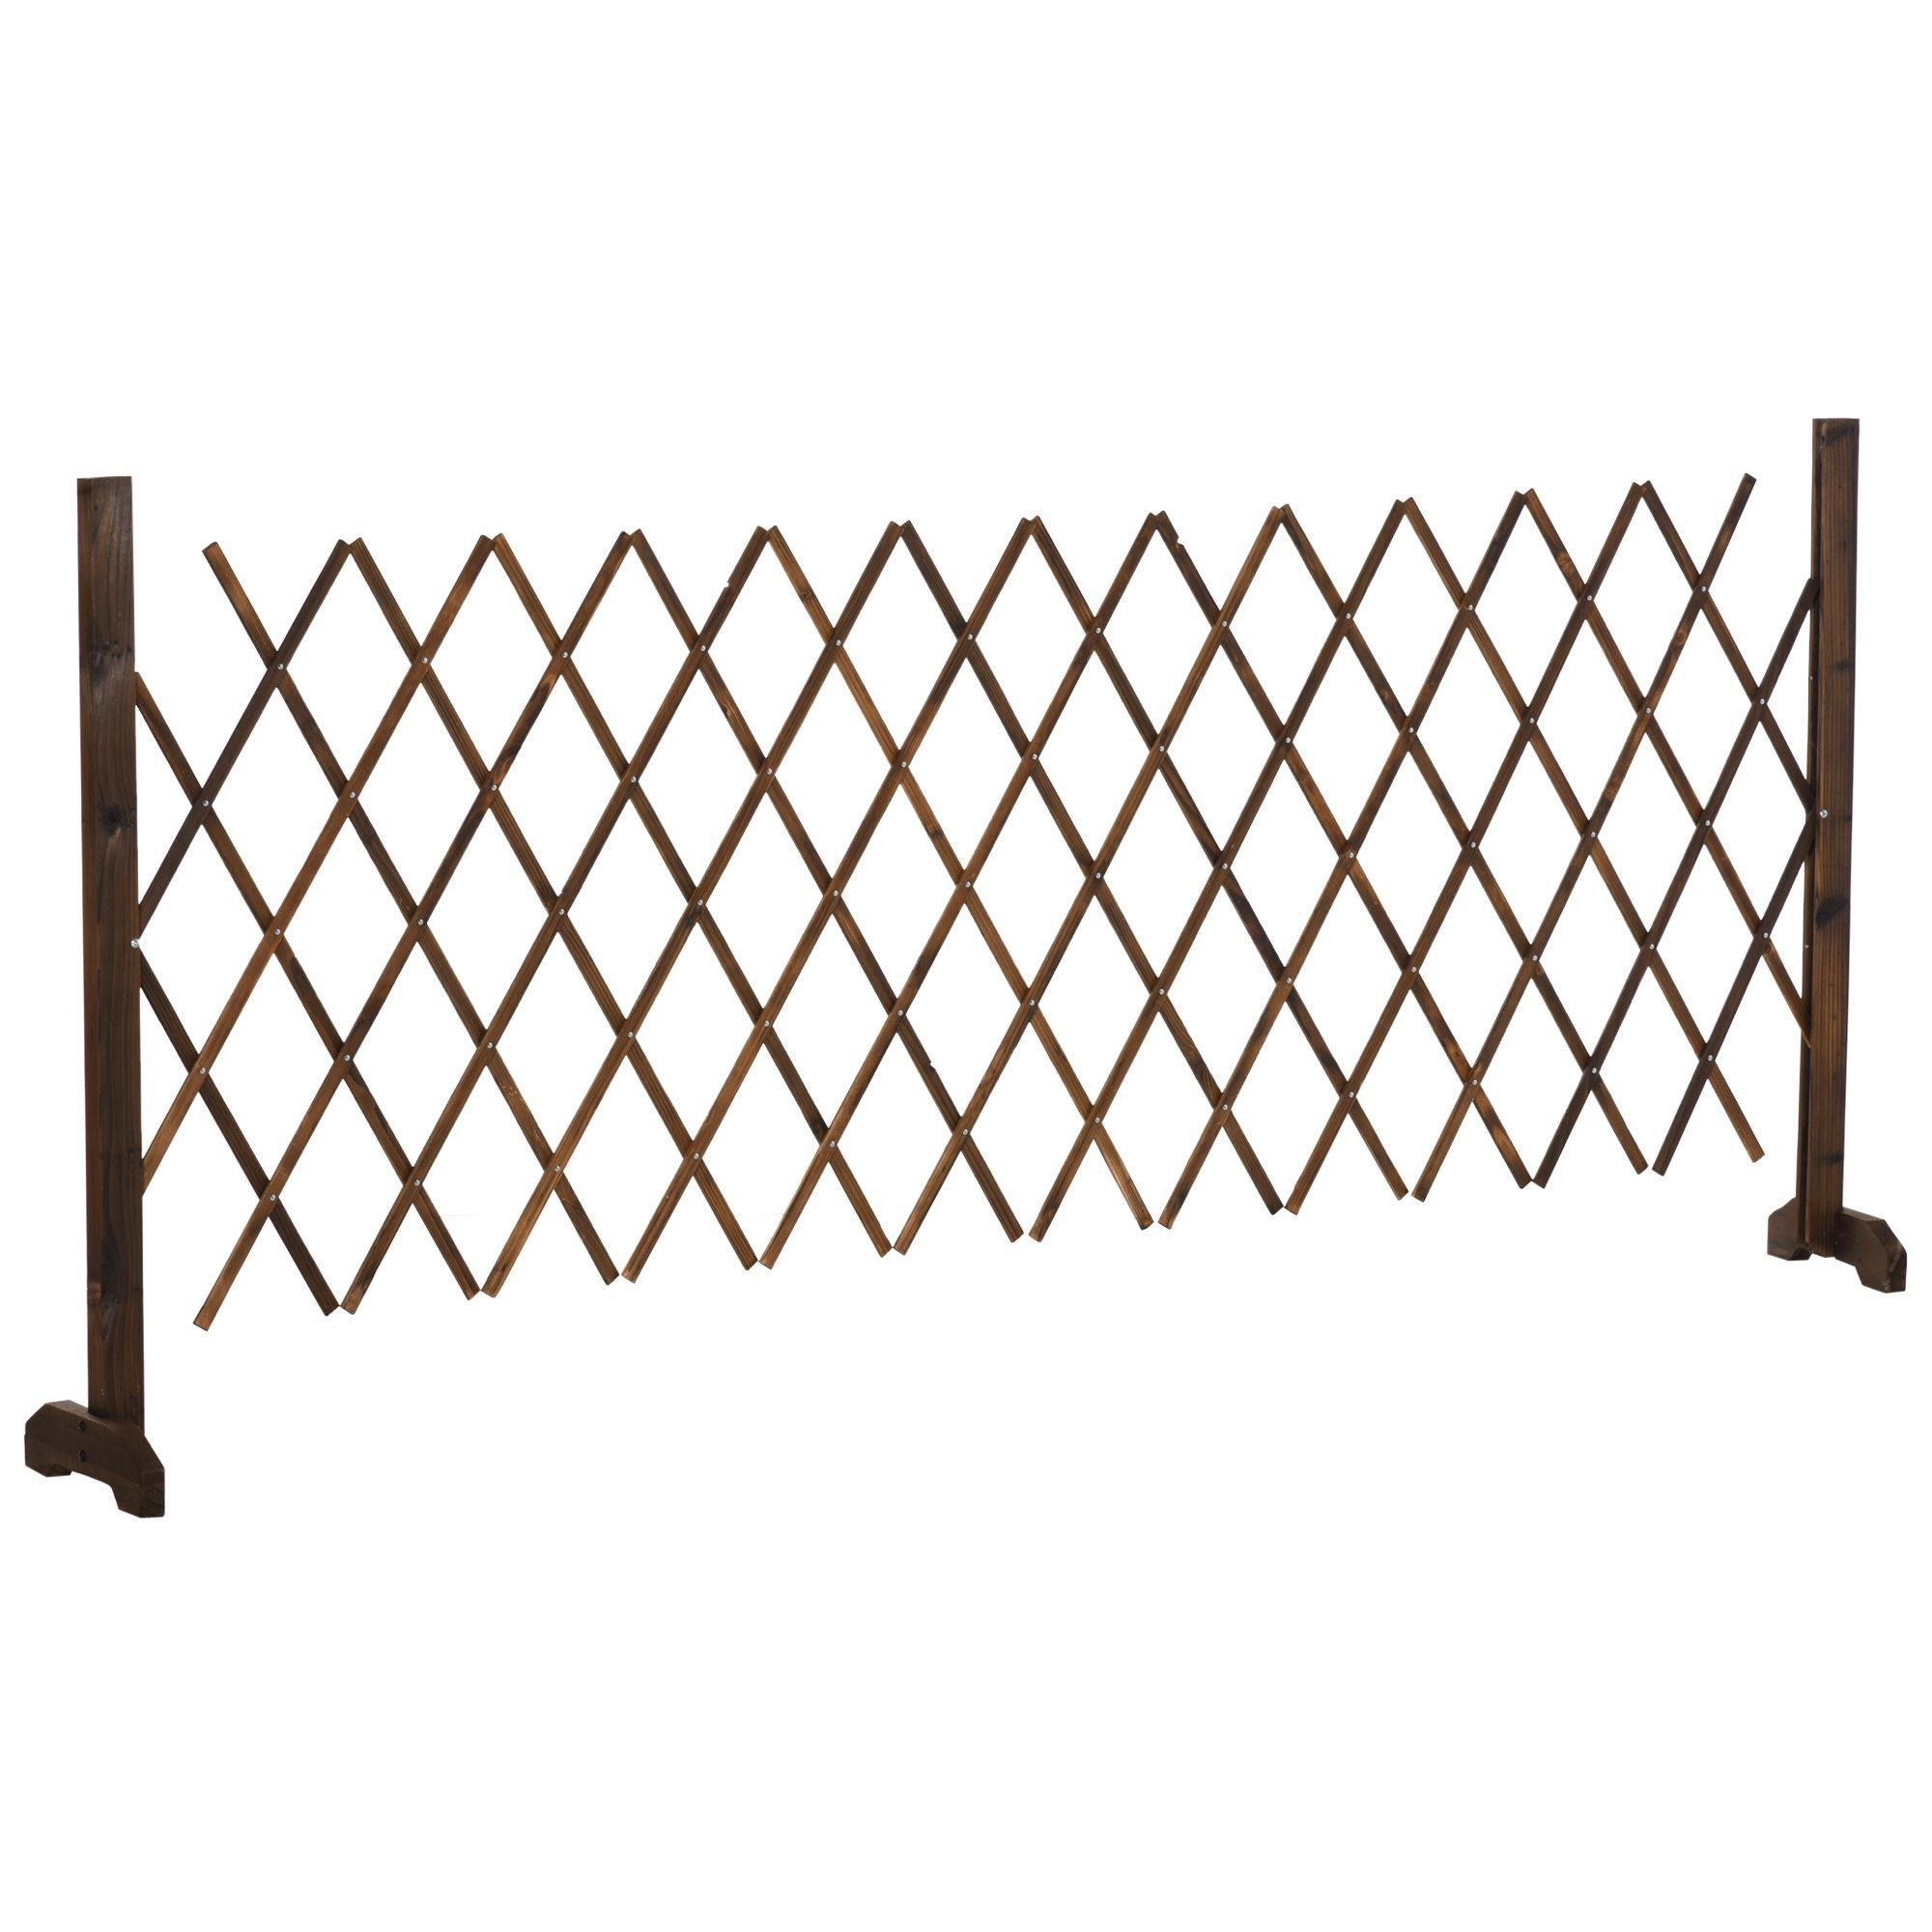 Expanding Garden Fencing Freestanding Wooden Movable Fence Trellis, Dark Brown - image 1